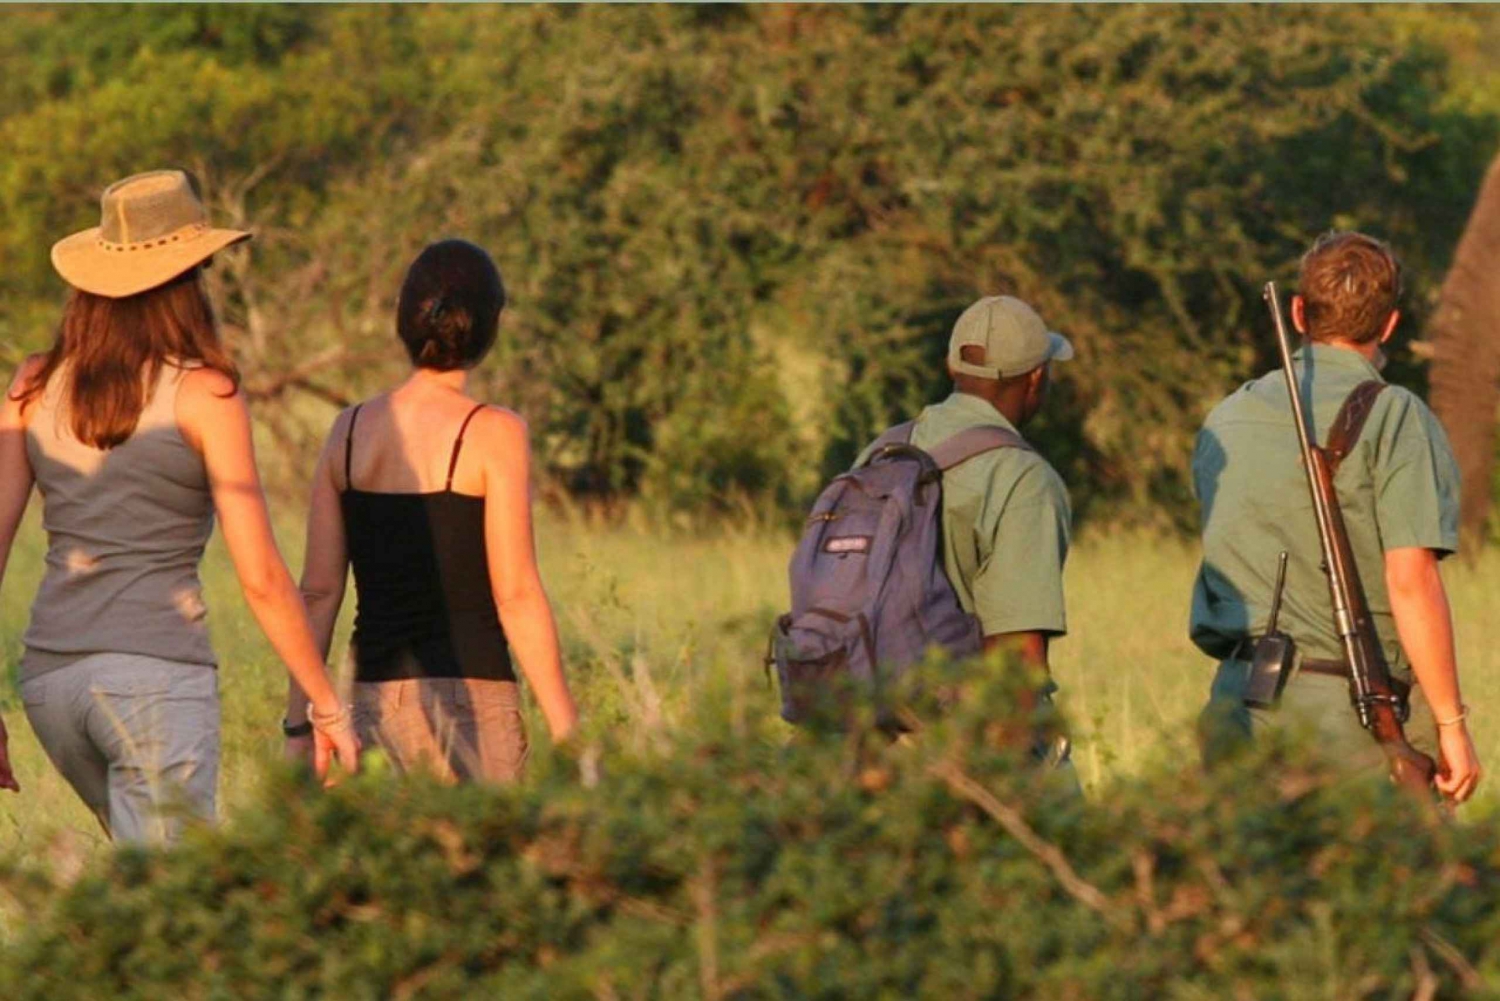 Excursión de 3 días al Parque Nacional Kruger desde Johannesburgo